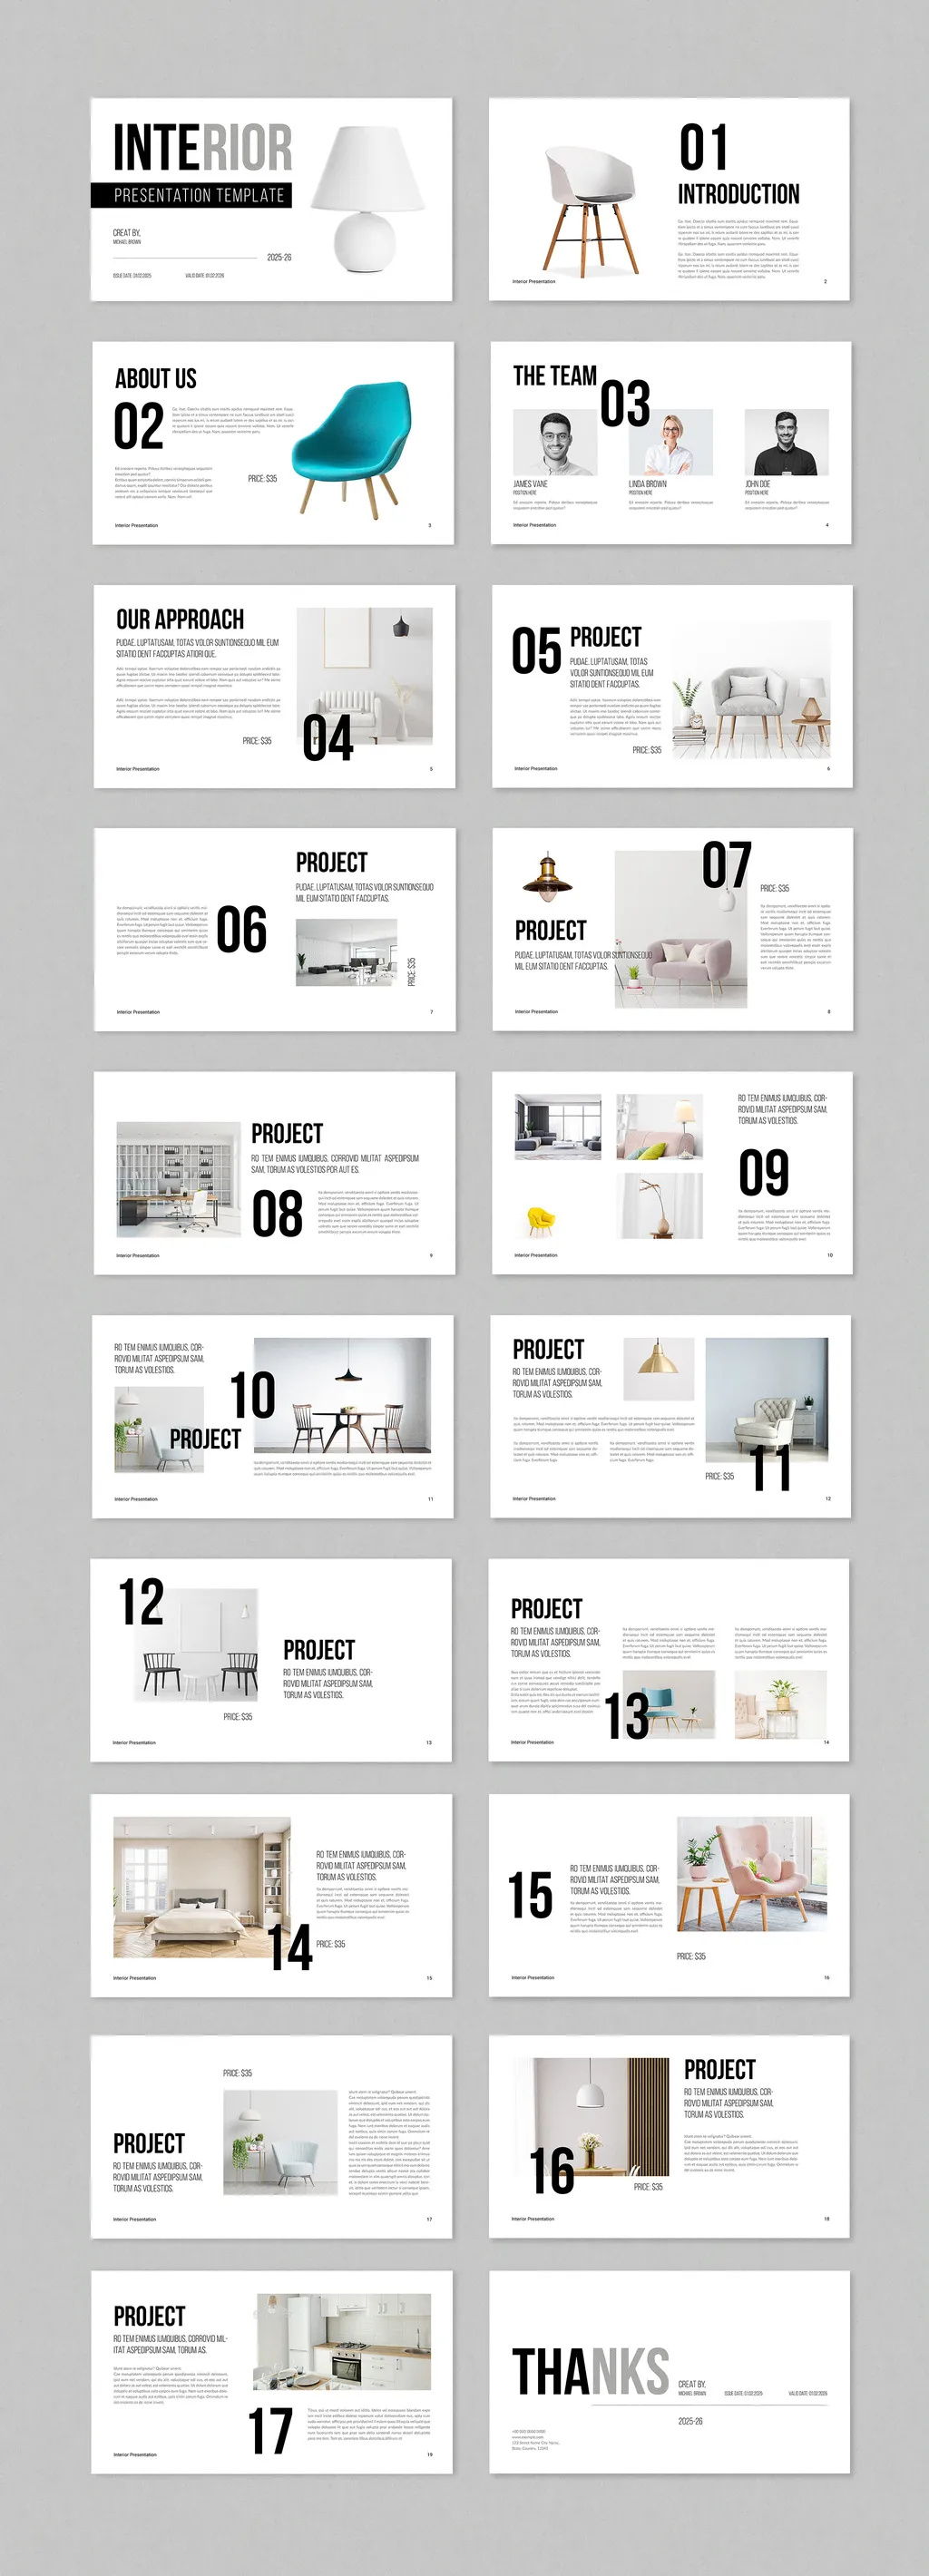 Adobestock - Interior Design Presentation Template Layout 757163841